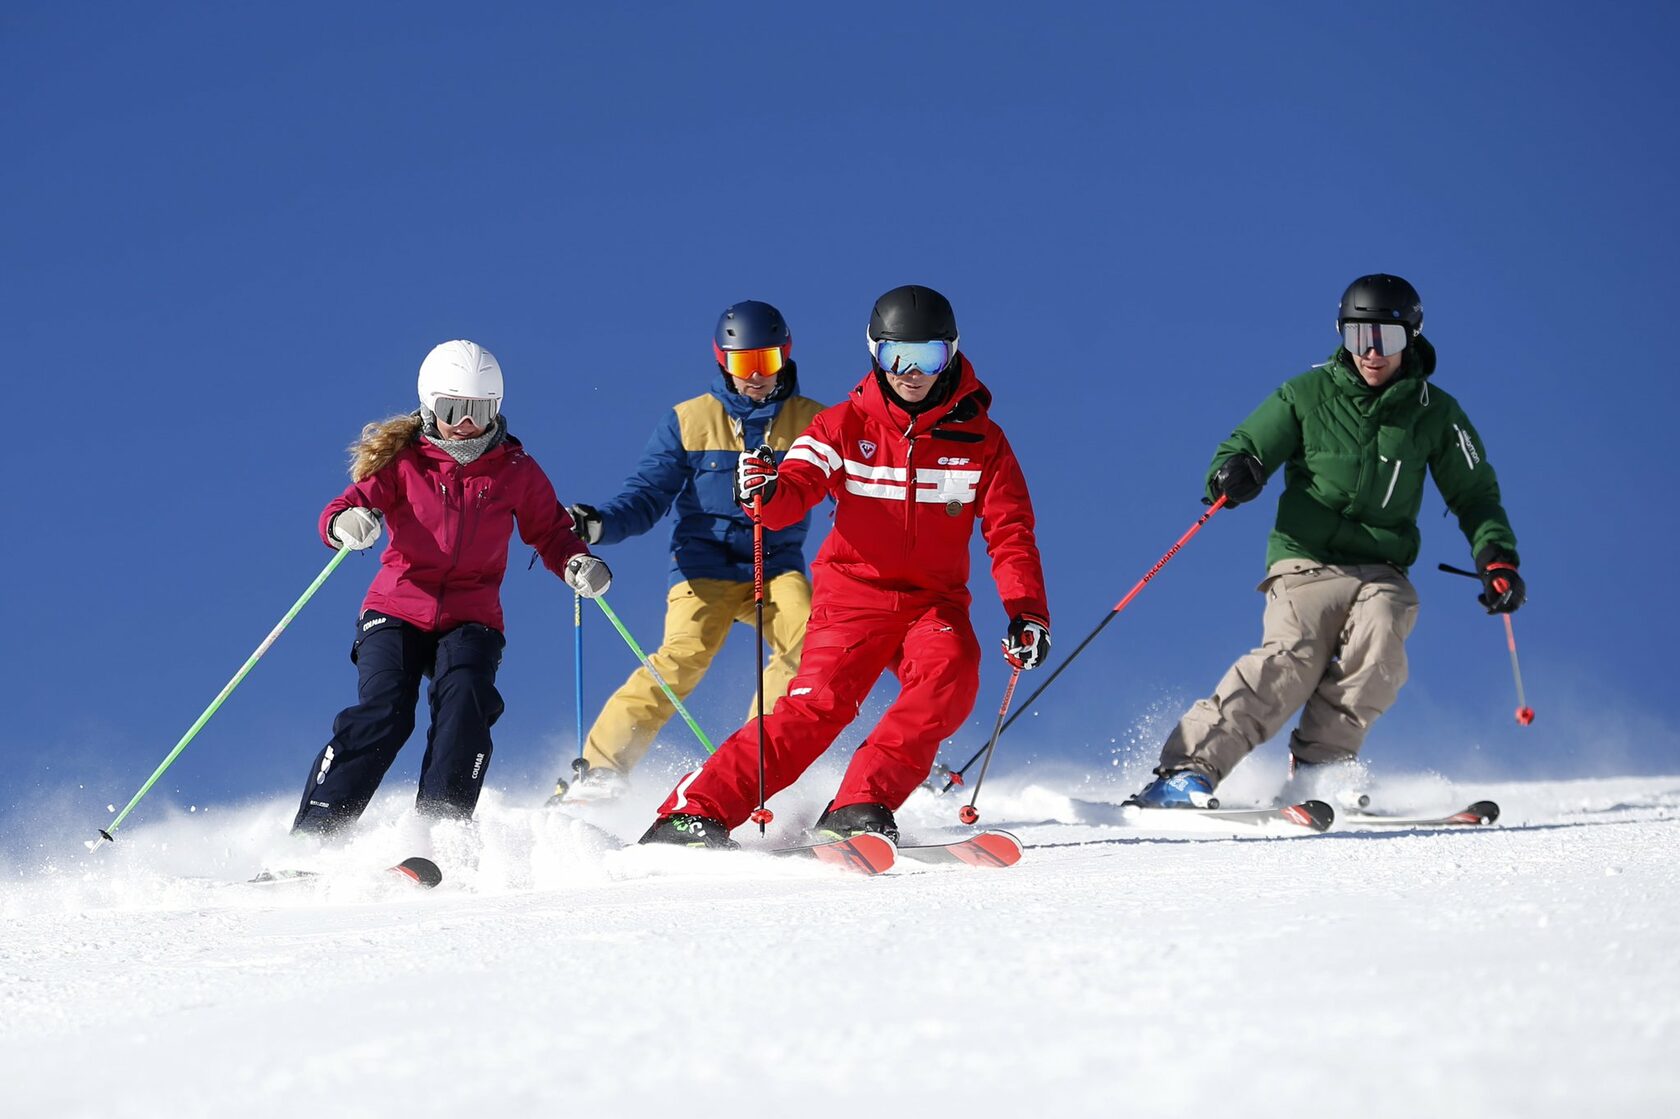 Skiing instructor. Горнолыжный спорт. Дети на горных лыжах. Горнолыжный спорт дети. Горнолыжная школа.